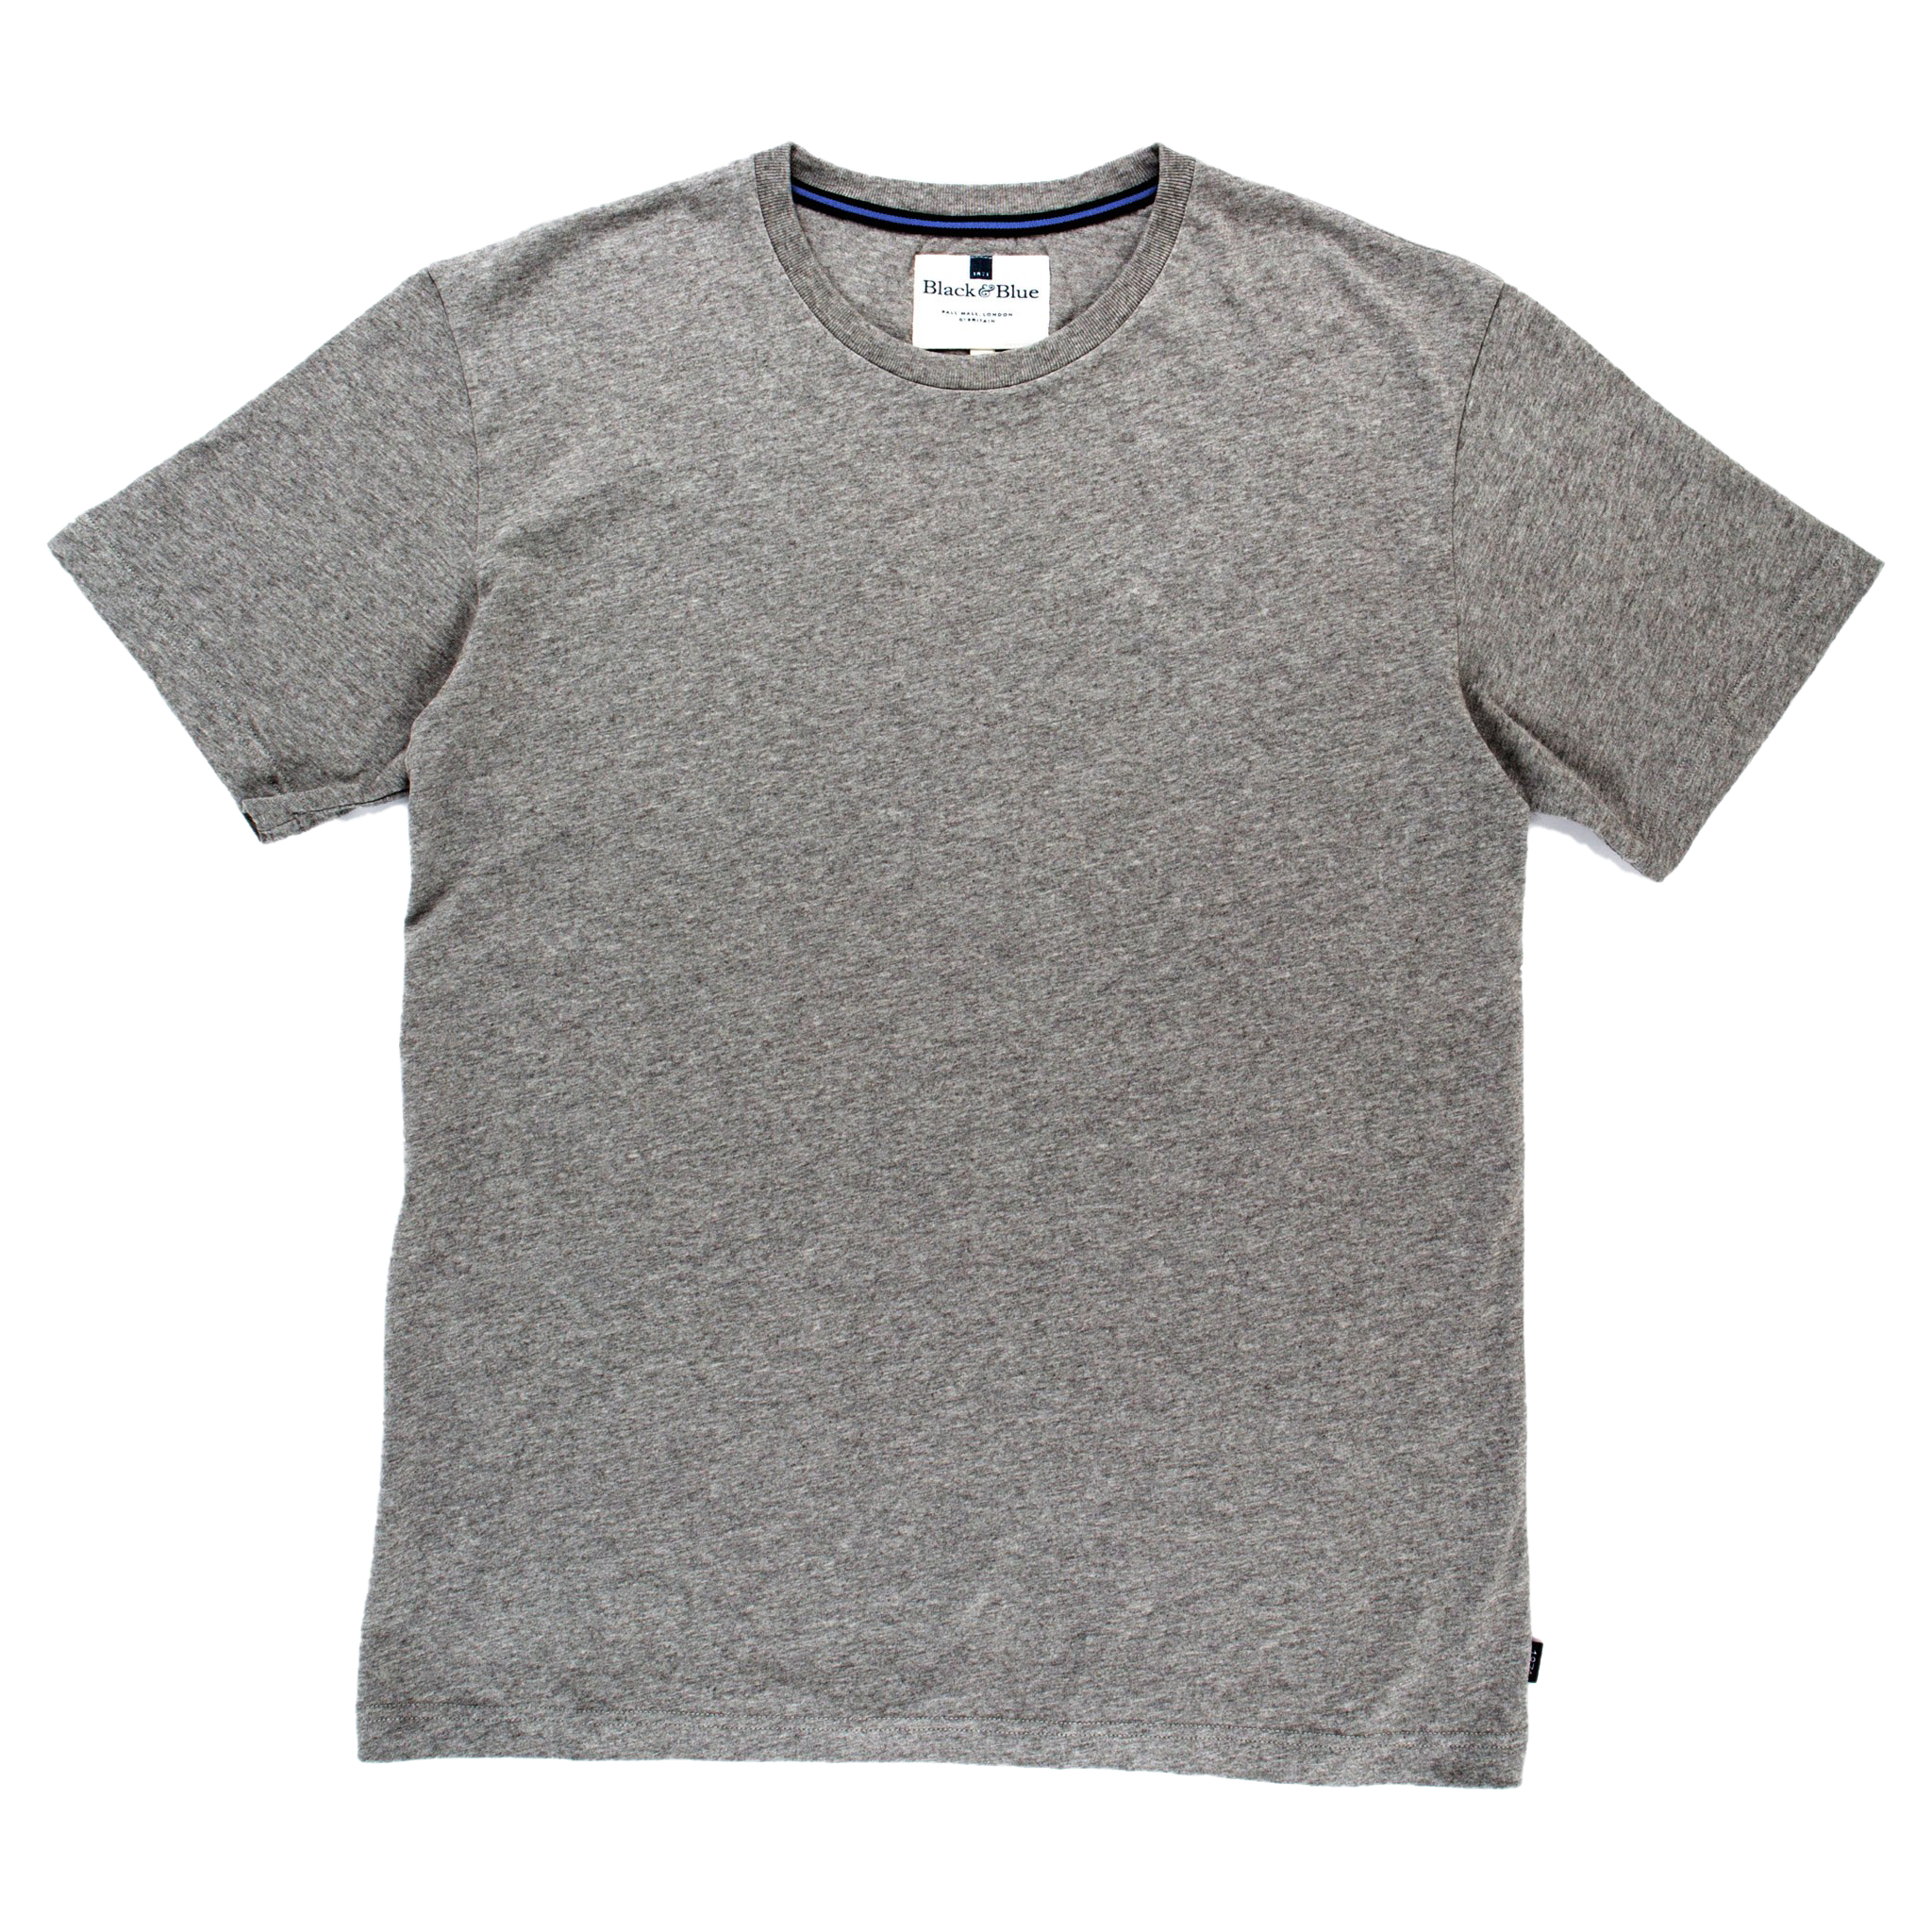 Plain Grey T-Shirt PNG Image